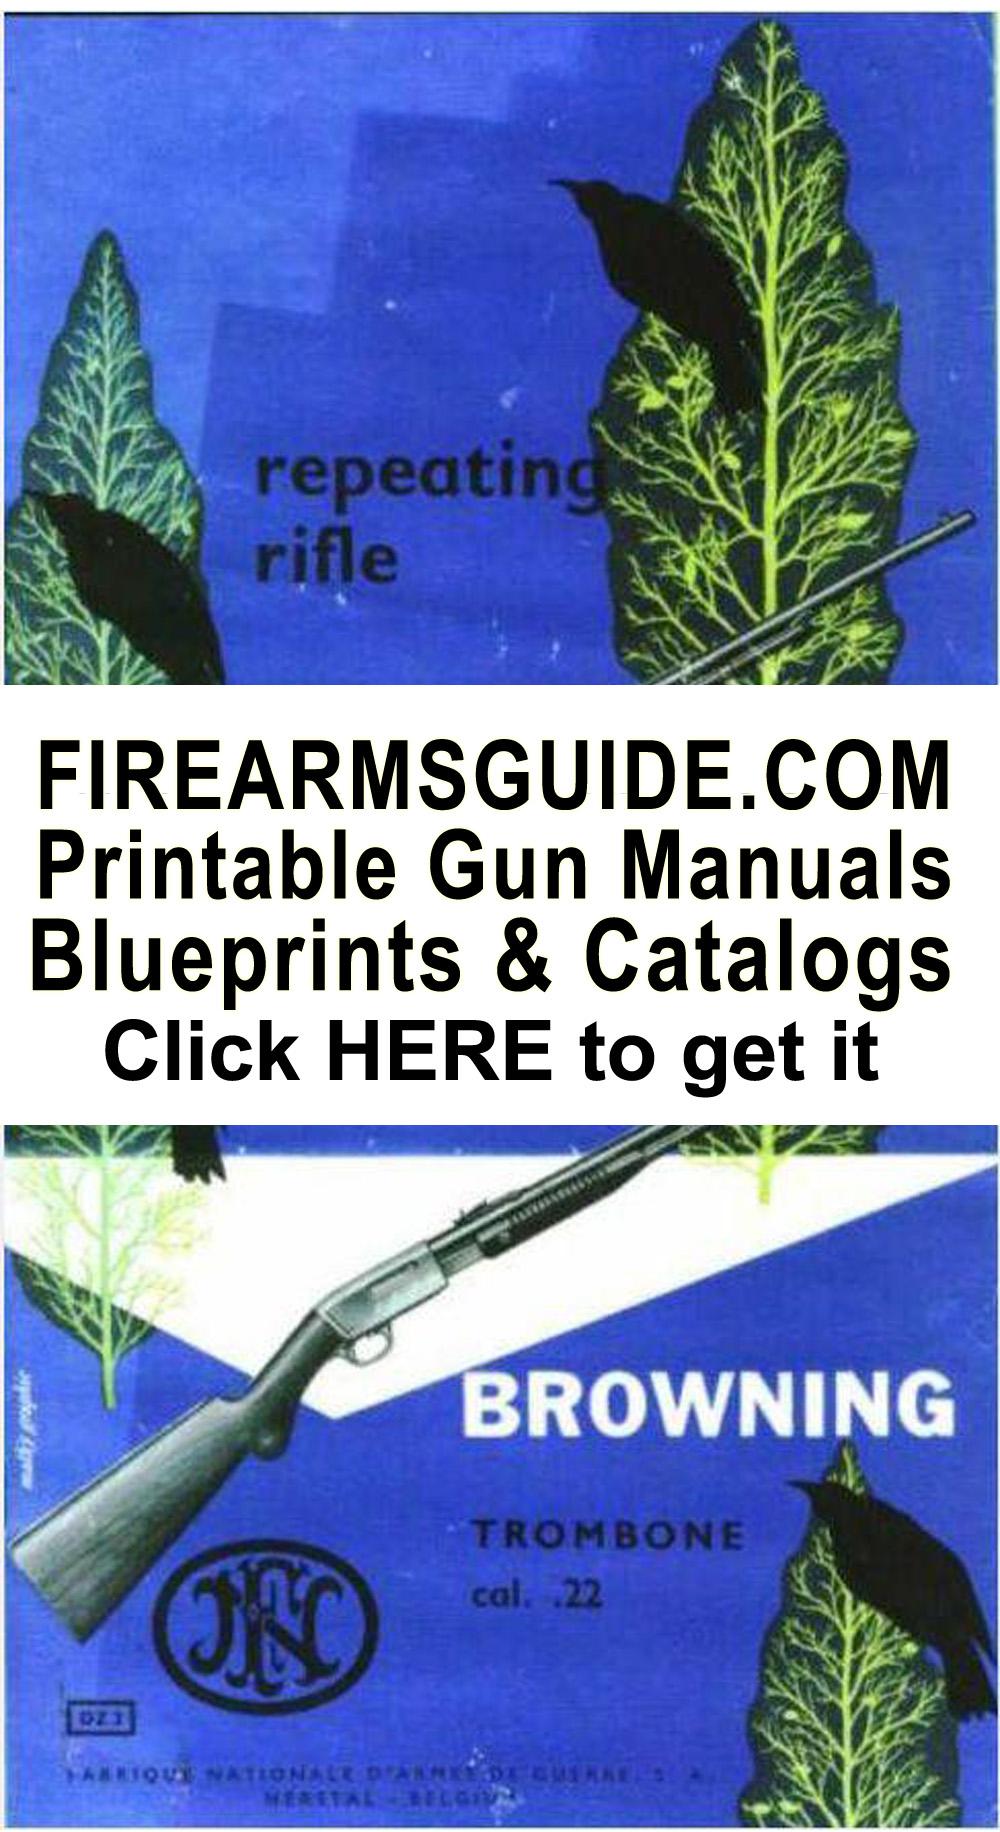 Browning BT-99 Firearms Gun Manual on CD 